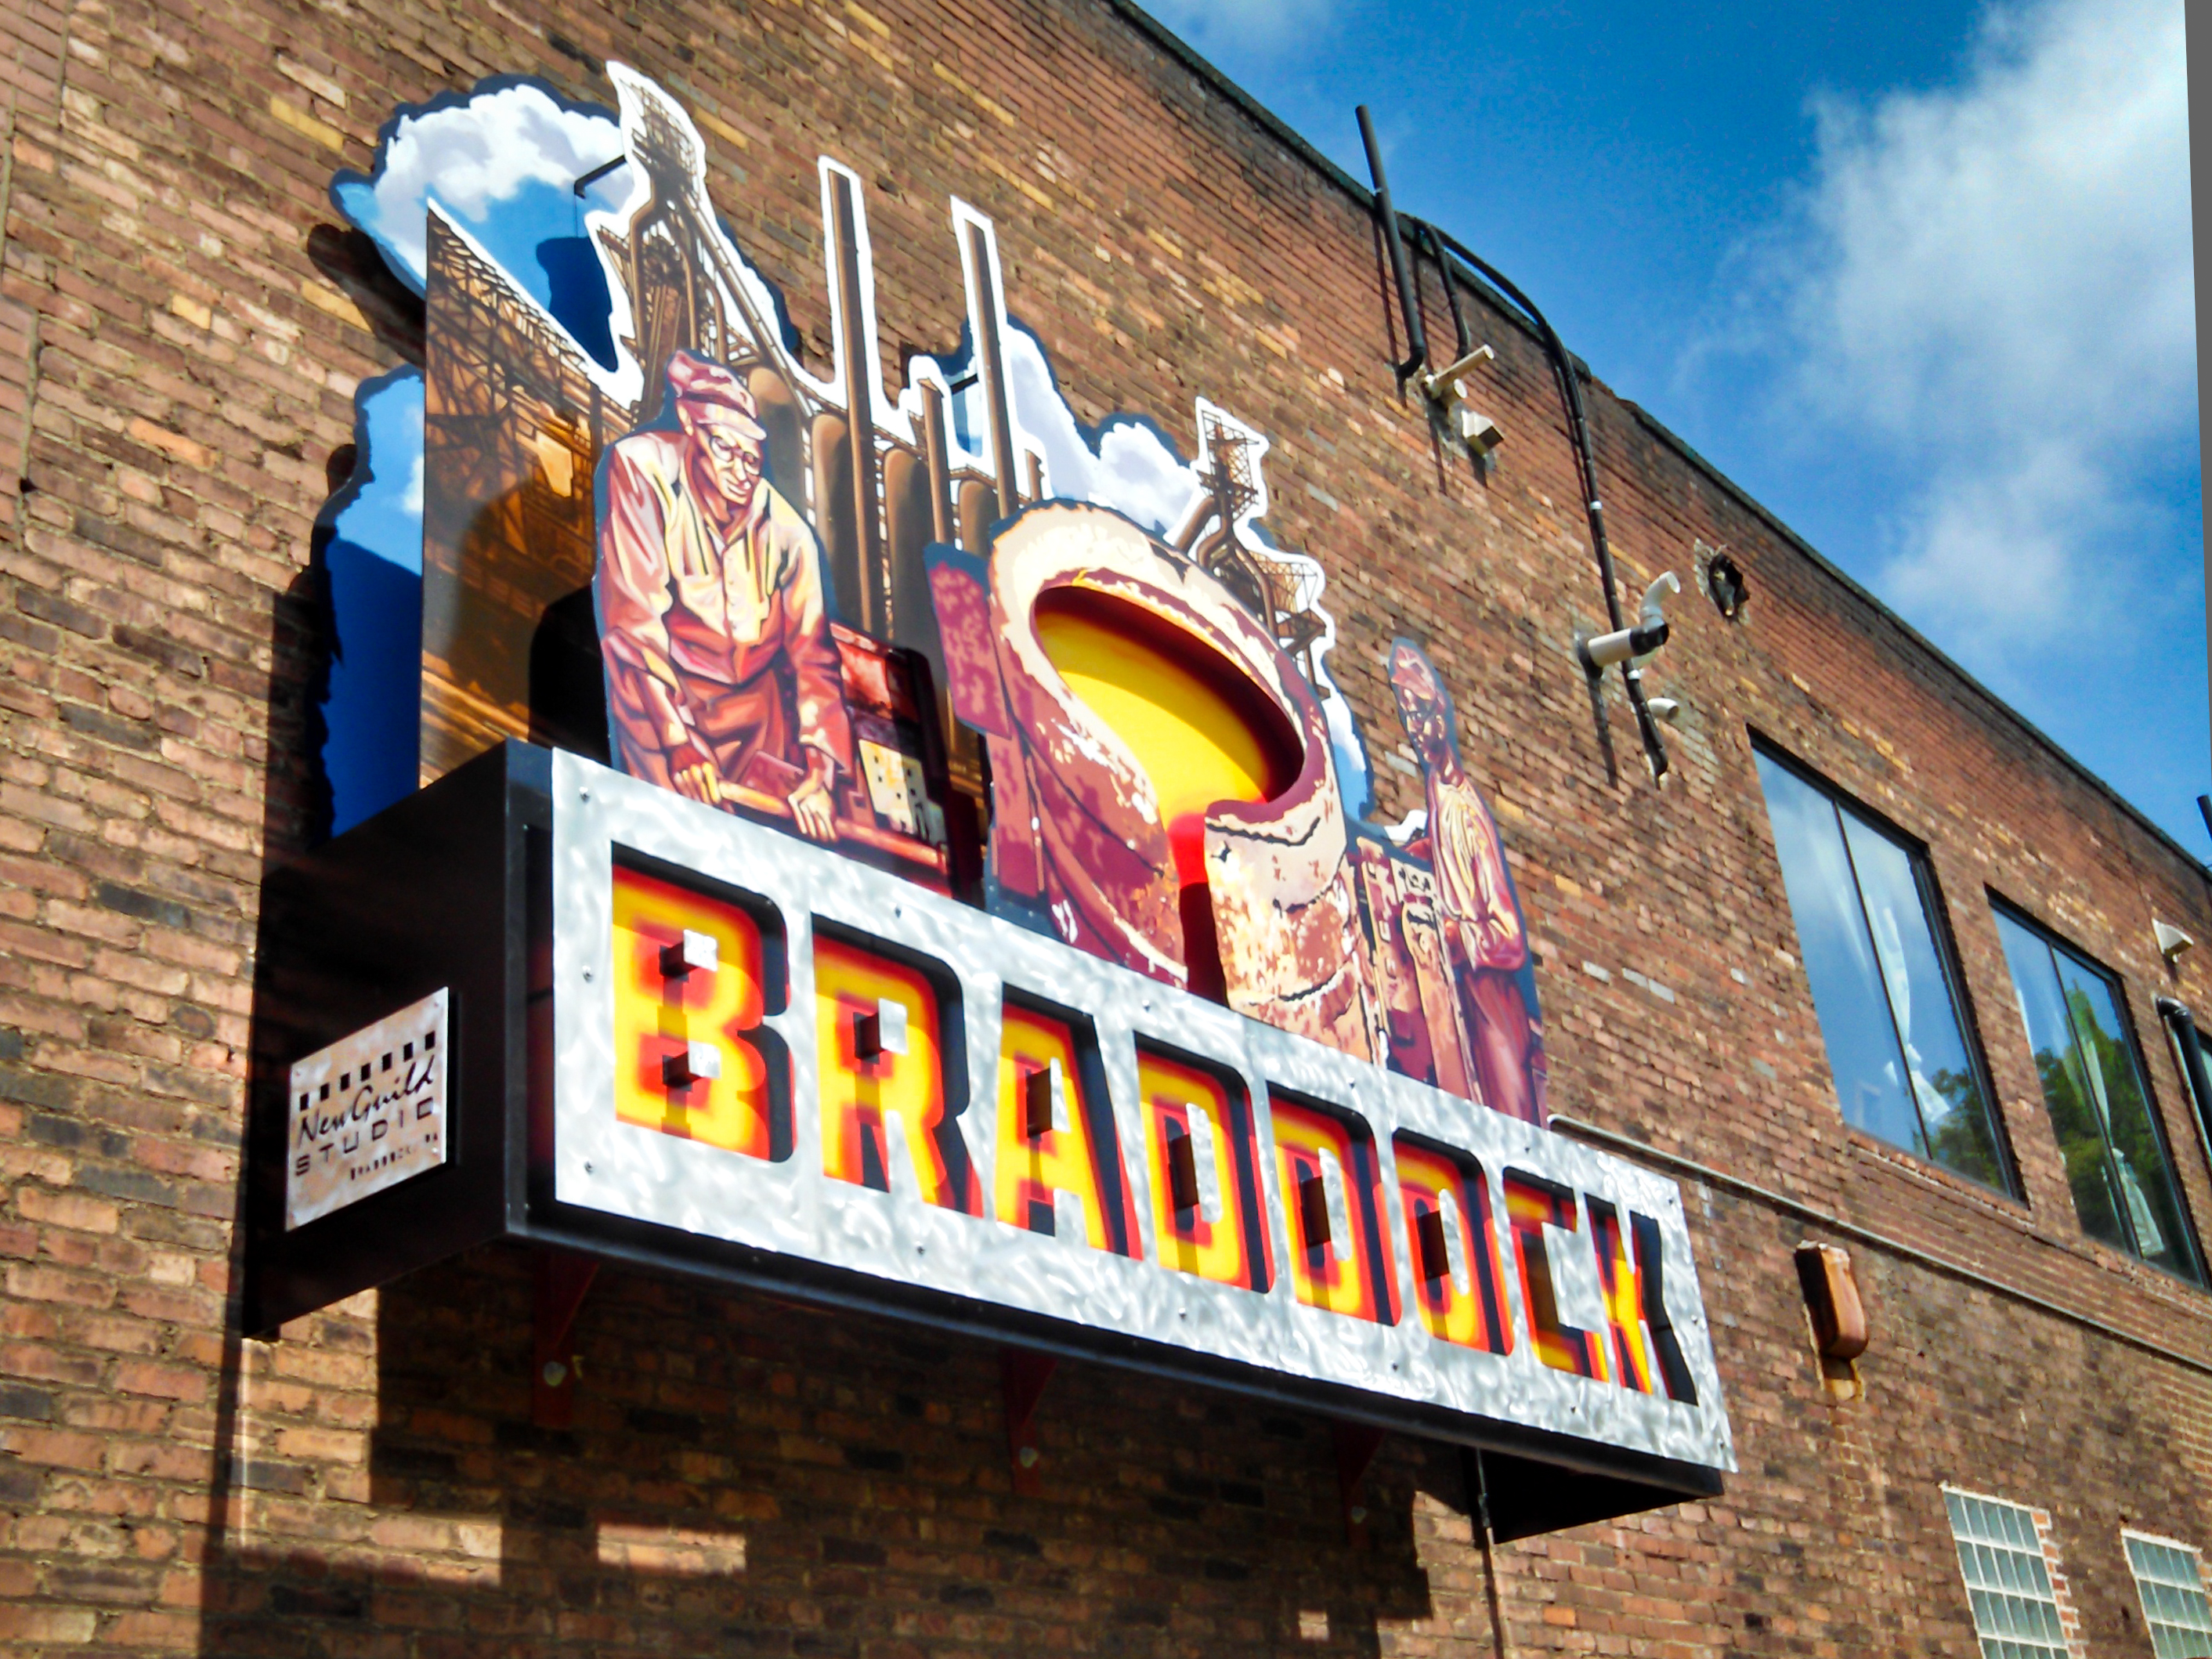 Braddock sign, courtesy of New Guild Studio